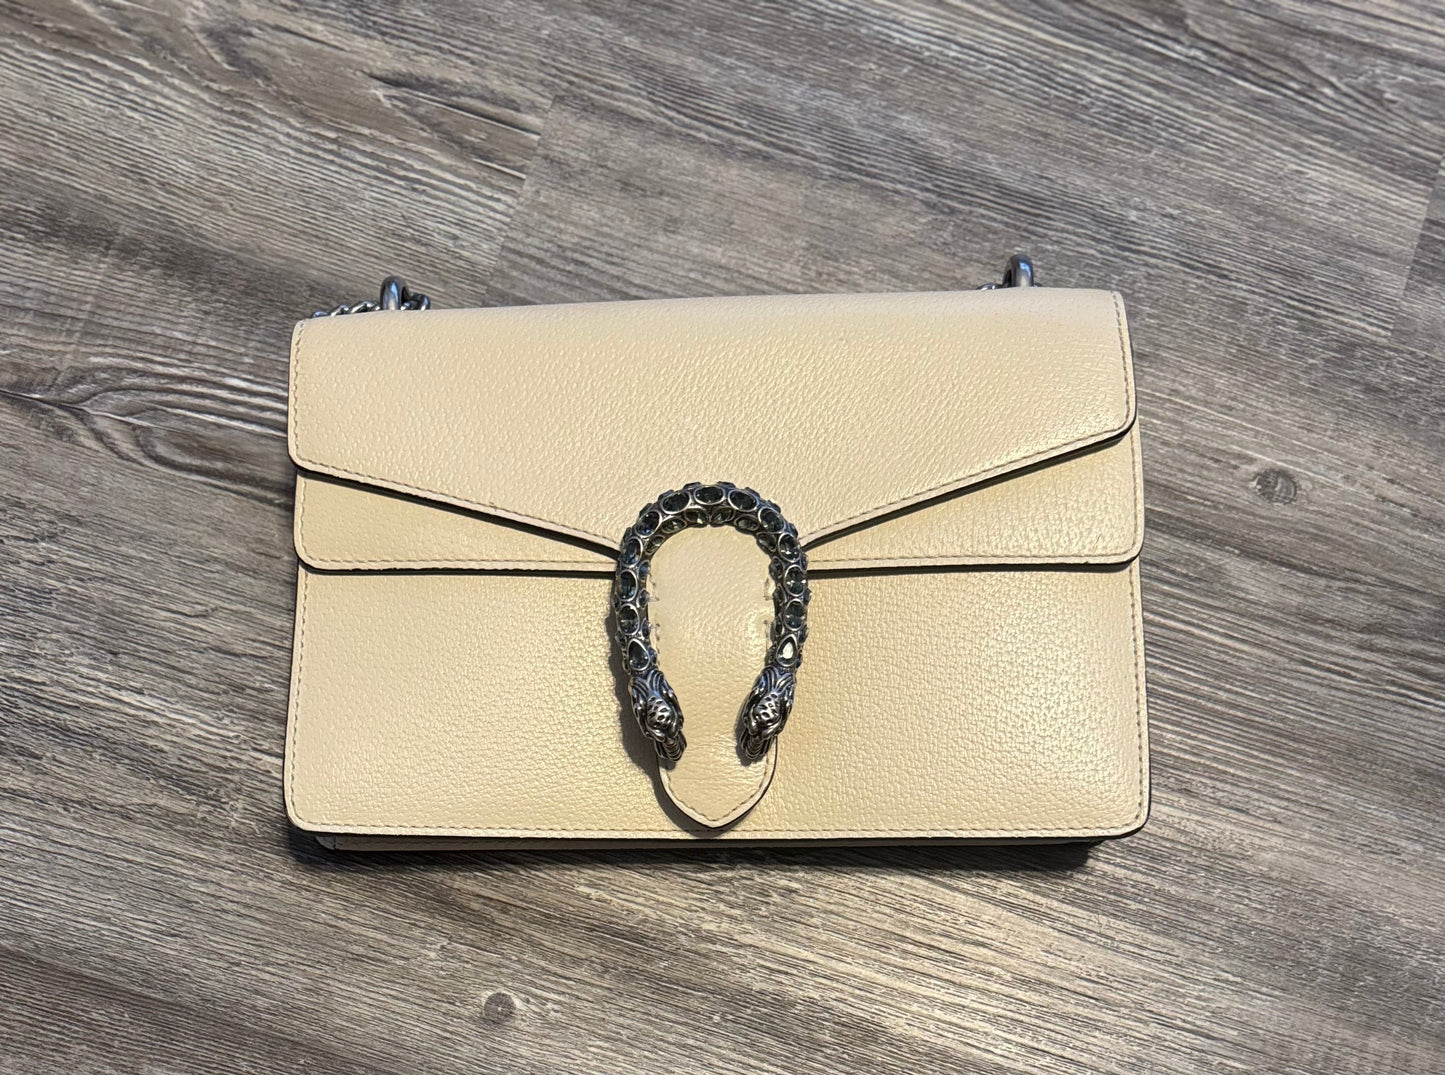 Handbag Luxury Designer By Gucci  Size: Small